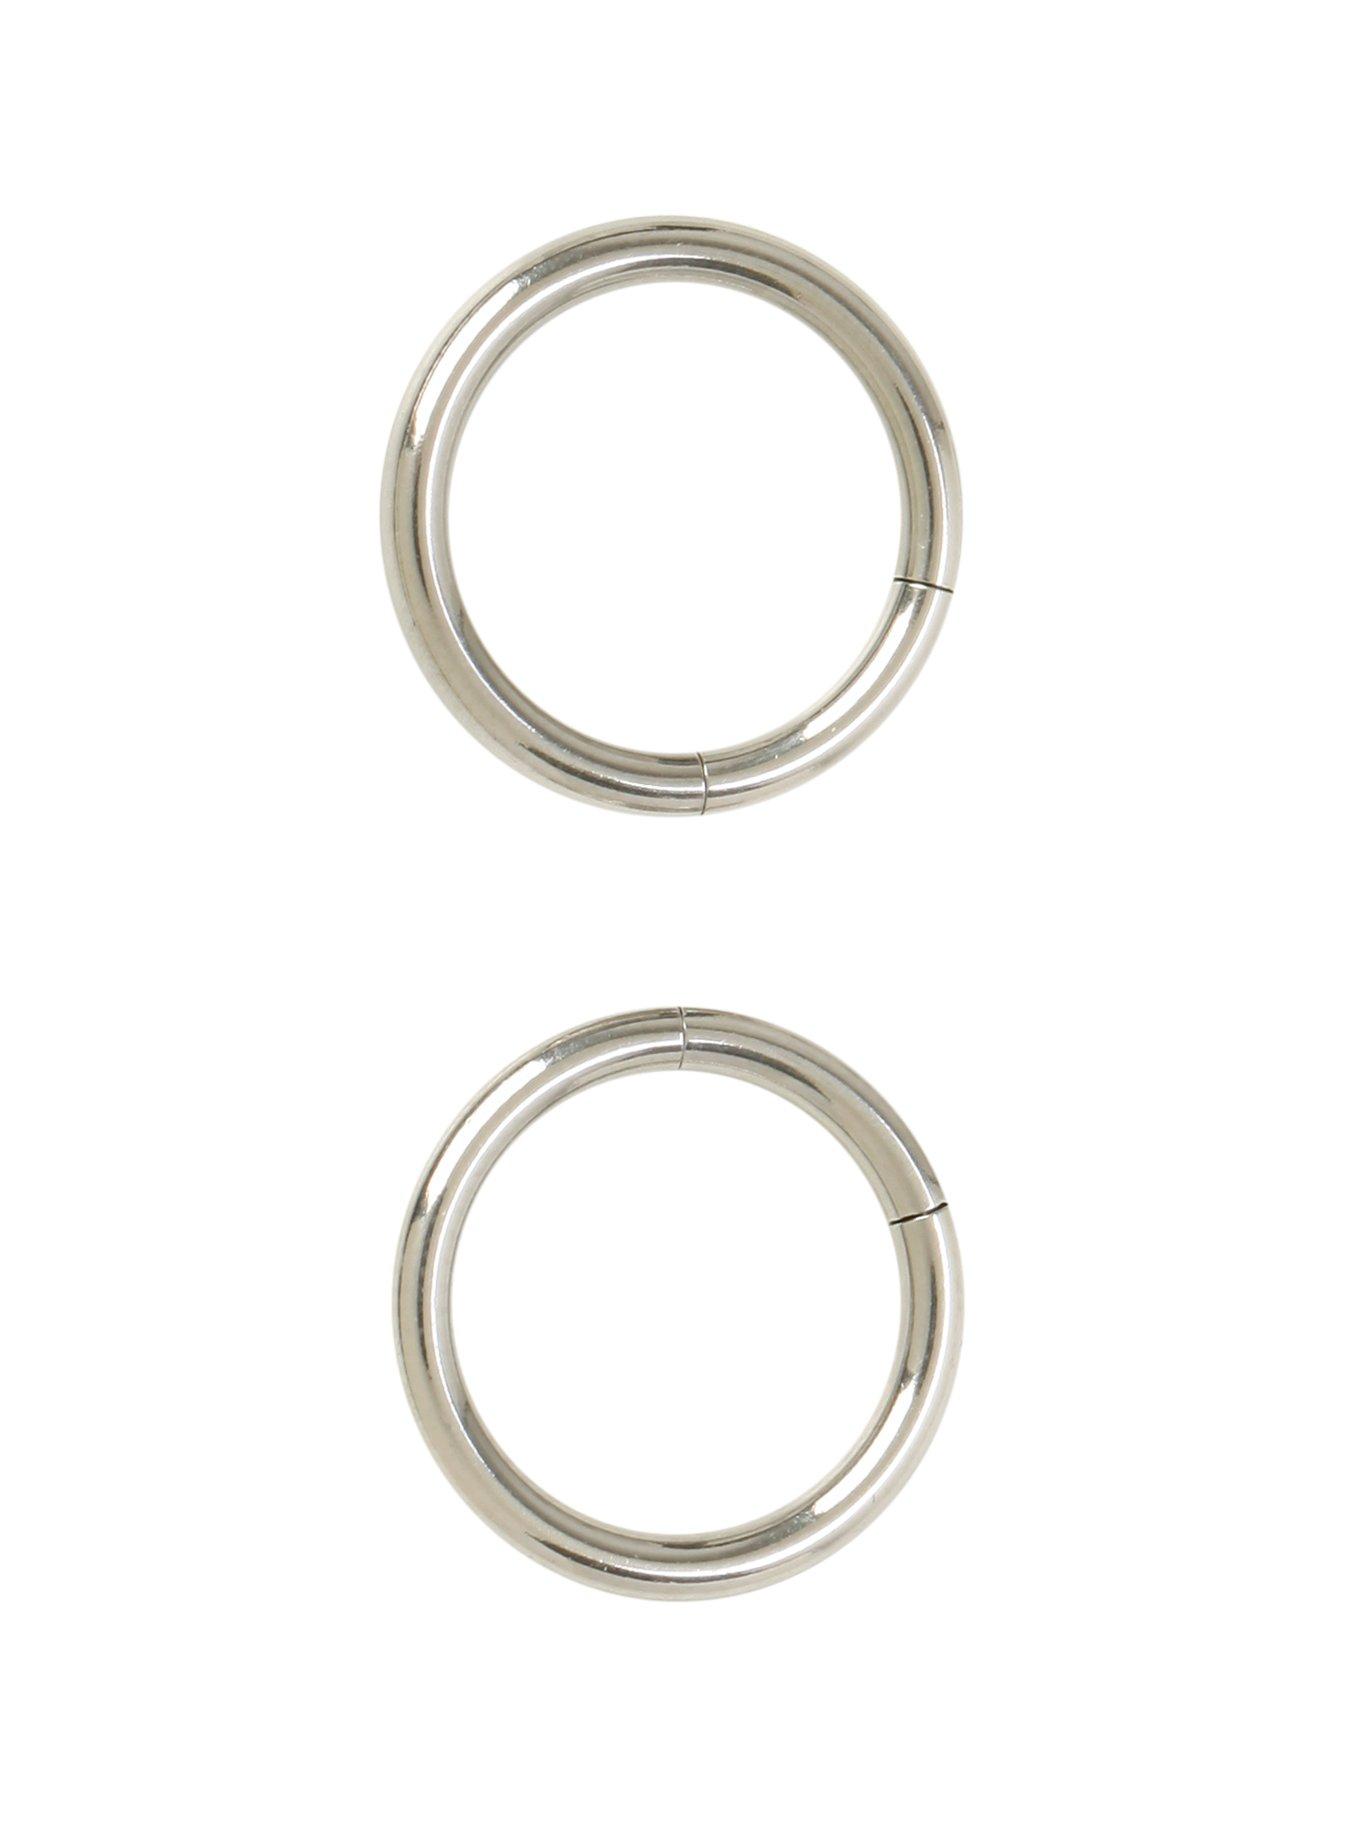 Steel Silver Tone Segment Ring 2 Pack, MULTI, hi-res